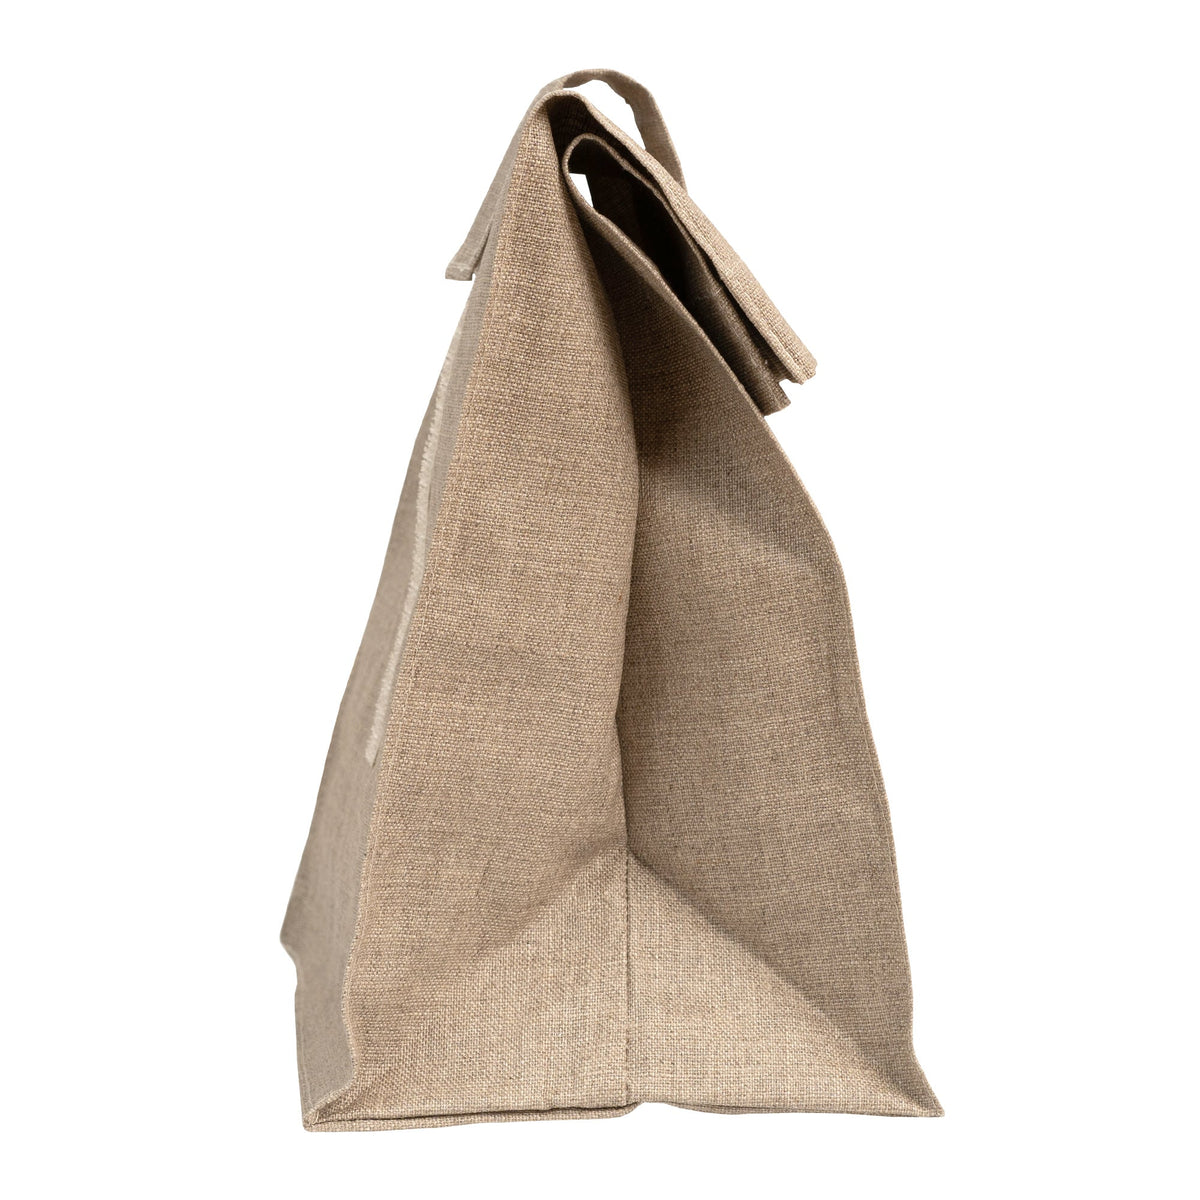 MENIQUE Reusable Waterproof Lunch Bag Natural